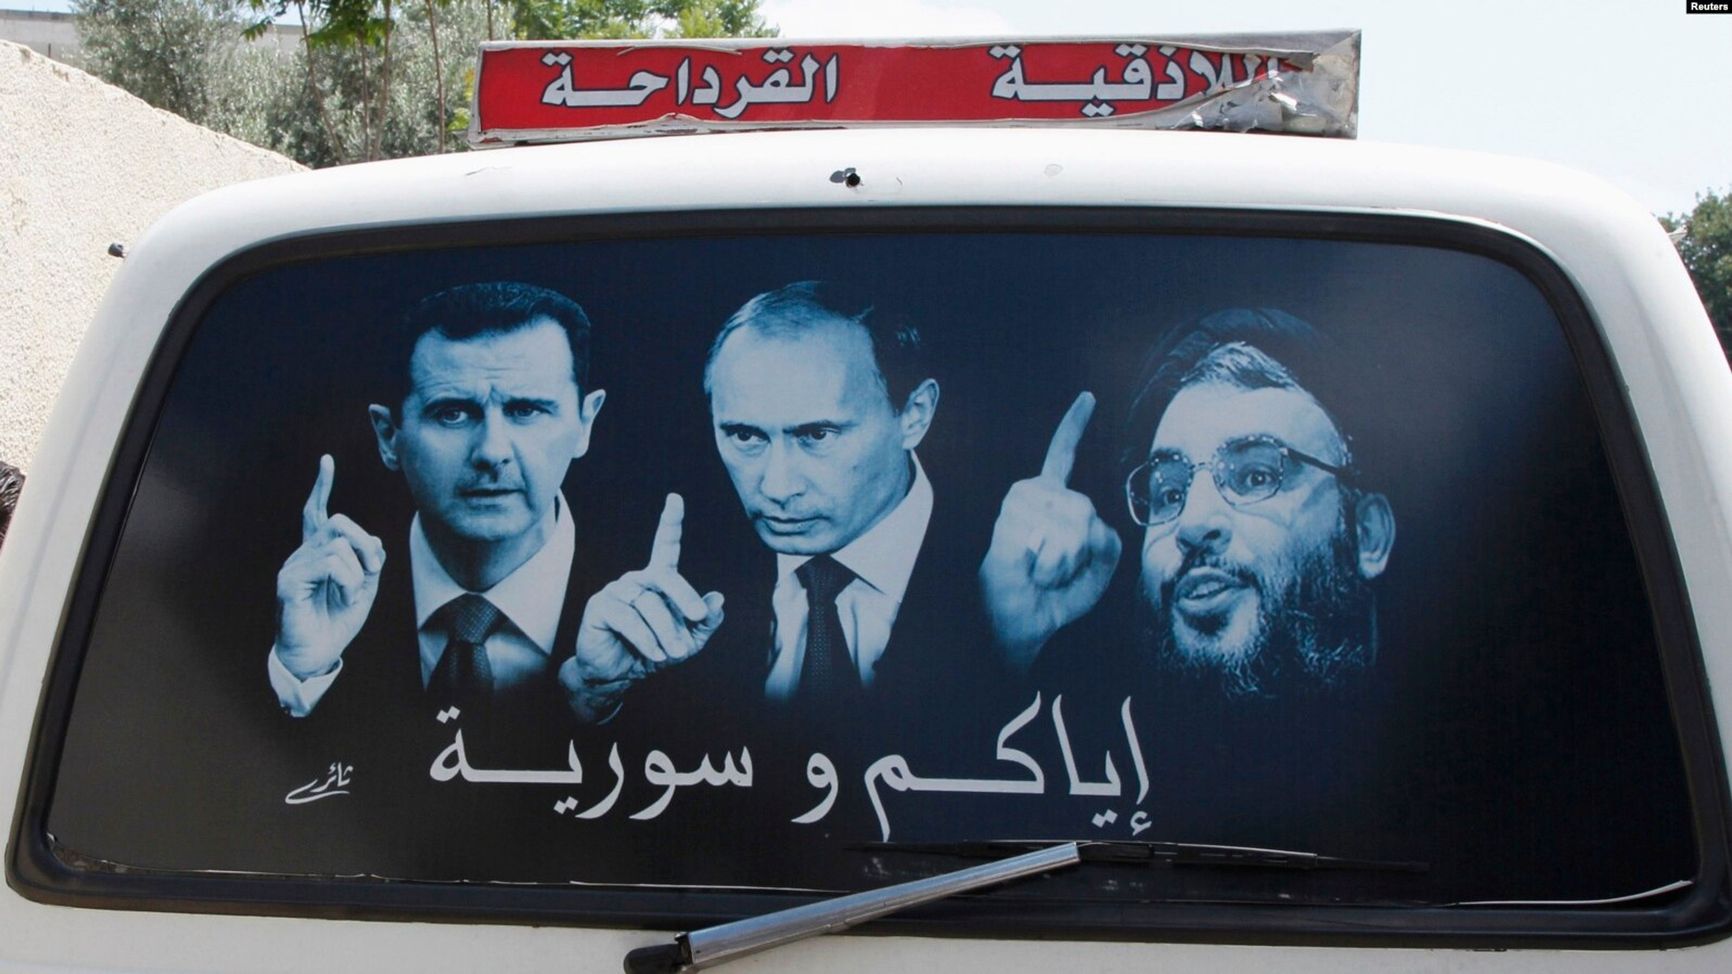 The decal on the car window depicts Syrian President Bashar al-Assad, Russian President Vladimir Putin, and Hezbollah leader Sayyed Hassan Nasrallah. Latakia, Syria, May 2014. 